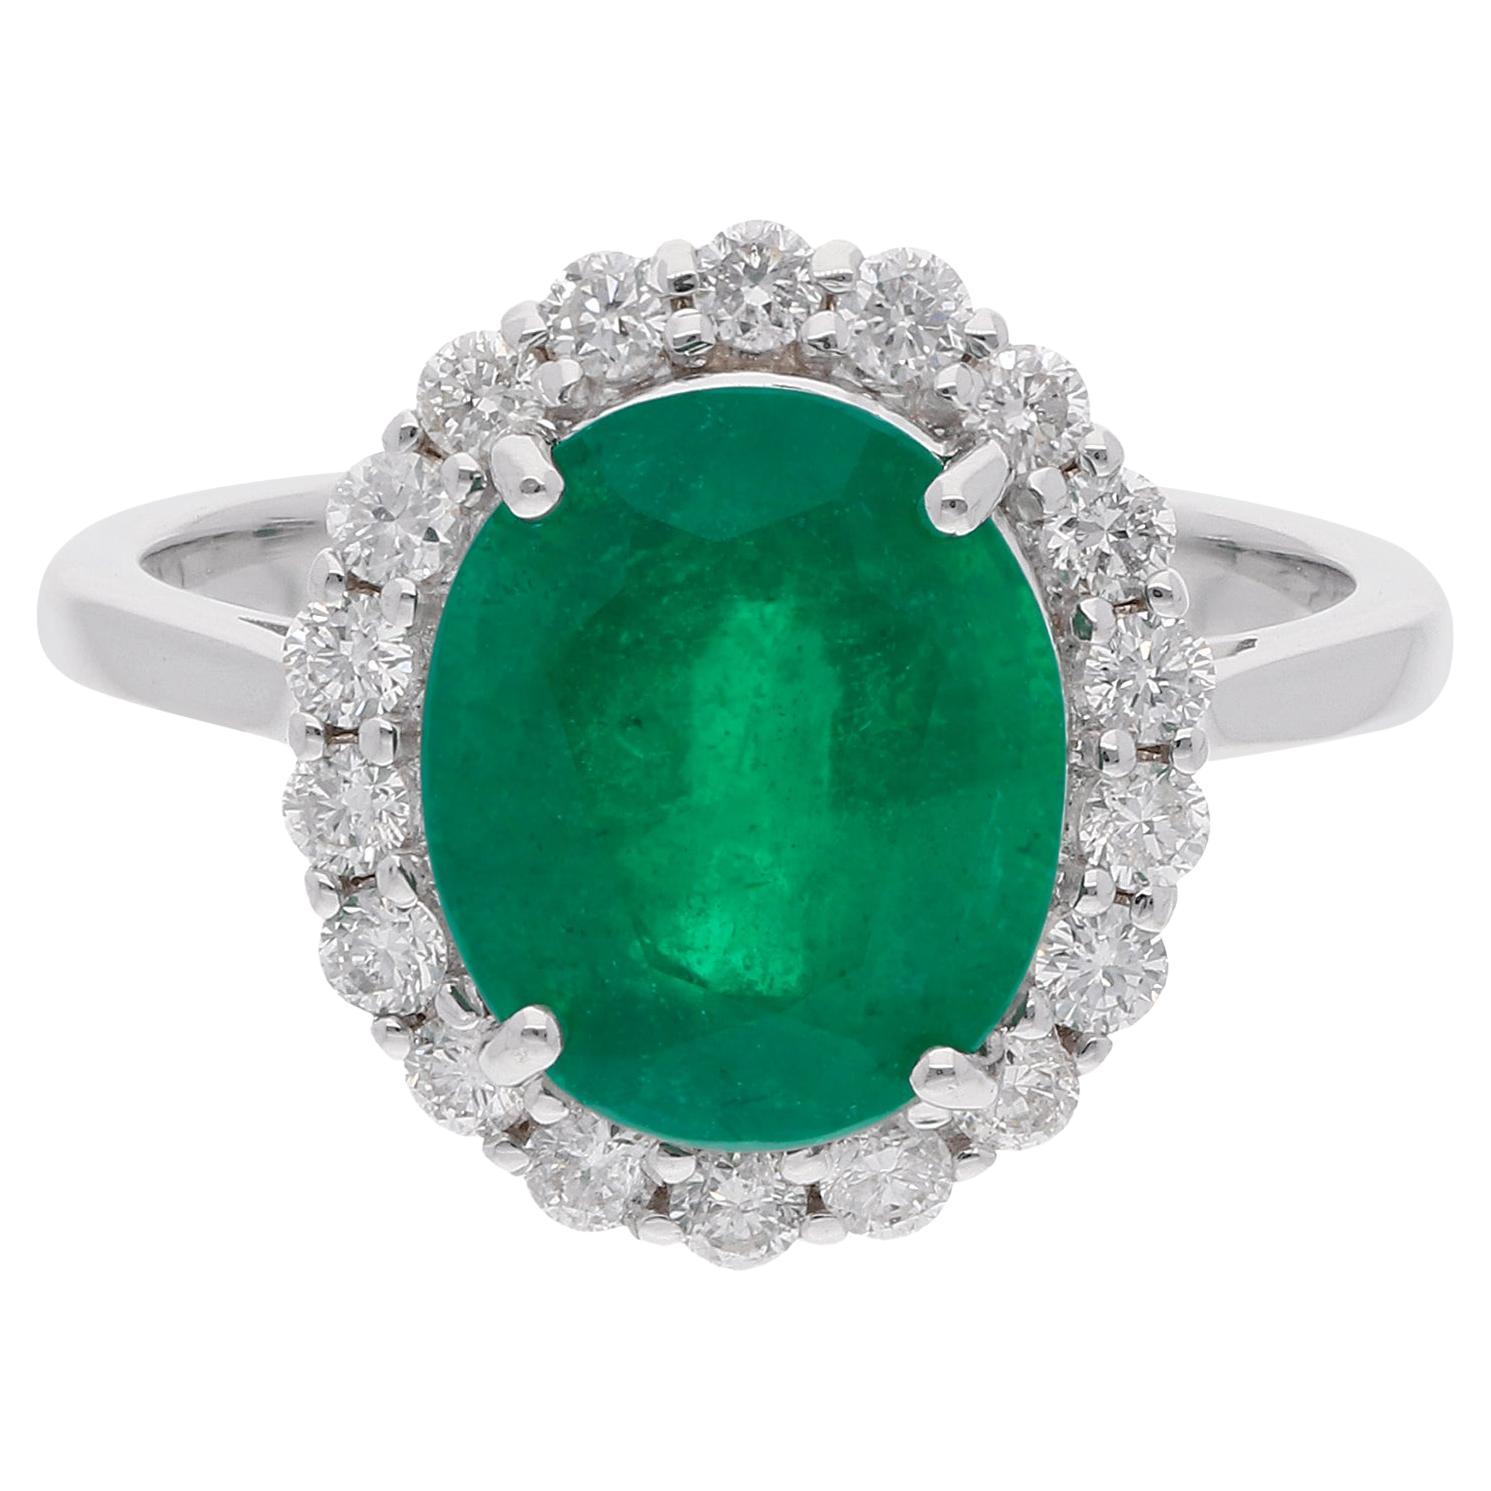 Oval Natural Emerald Gemstone Cocktail Ring Diamond 18 Karat White Gold Jewelry